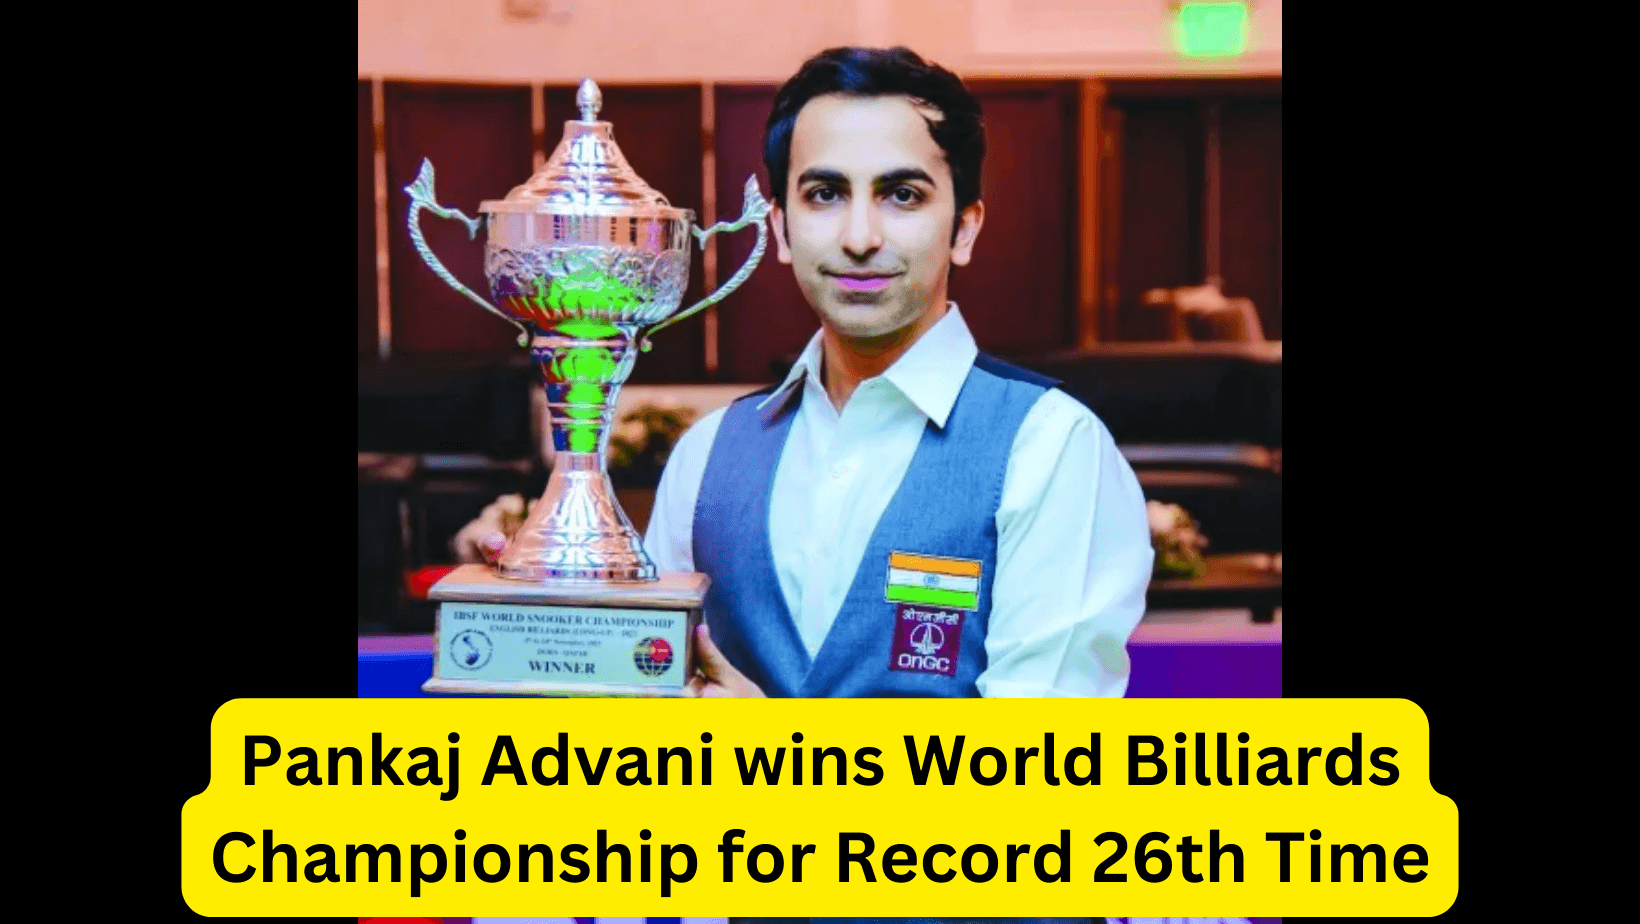 Pankaj Advani wins World Billiards Championship for Record 26th Time